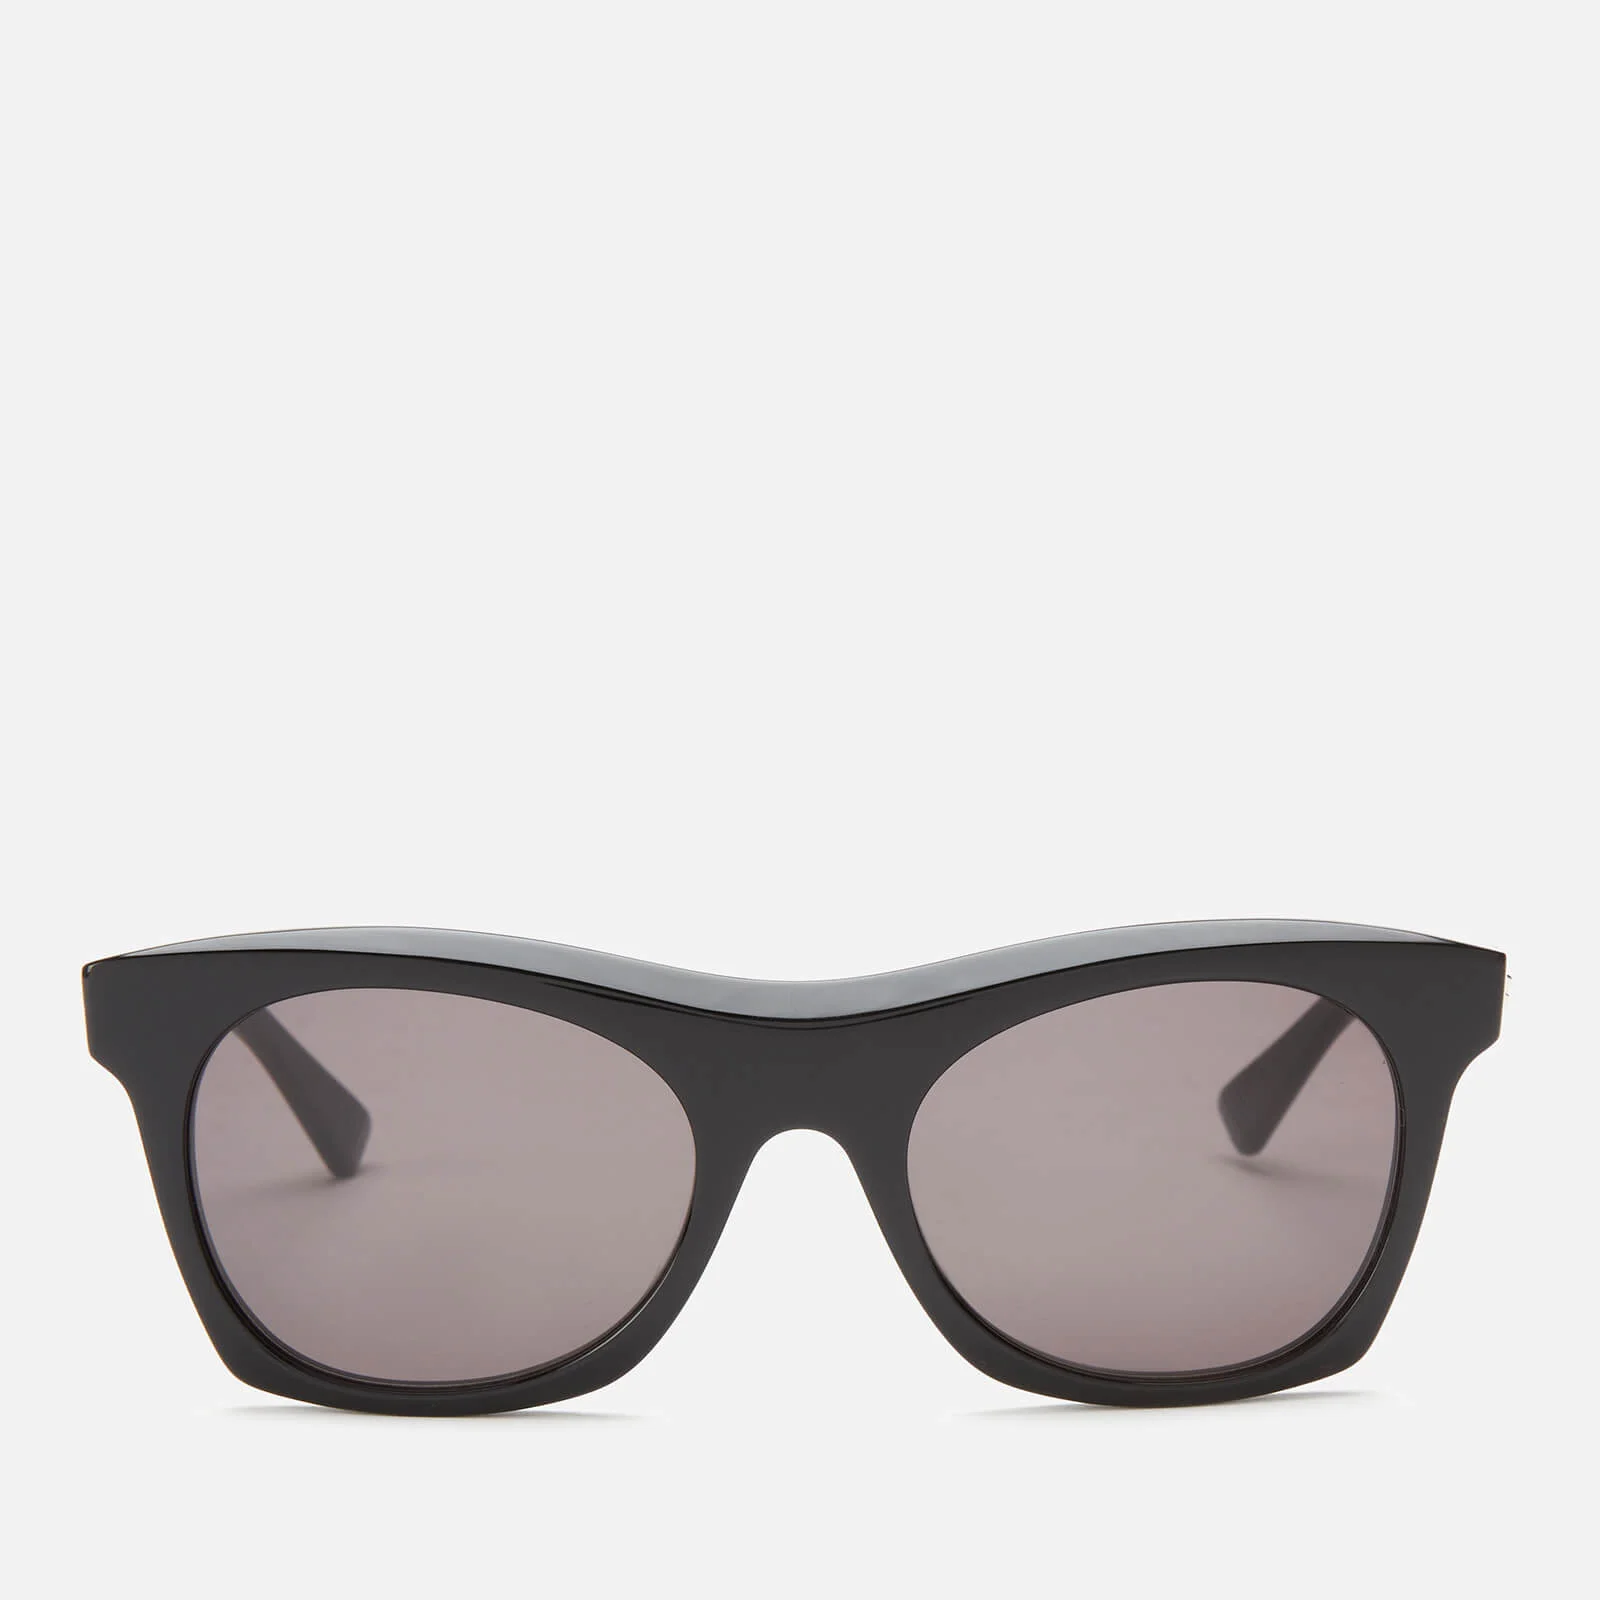 Bottega Veneta Women's Classic Acetate Sunglasses - Black/Grey Image 1